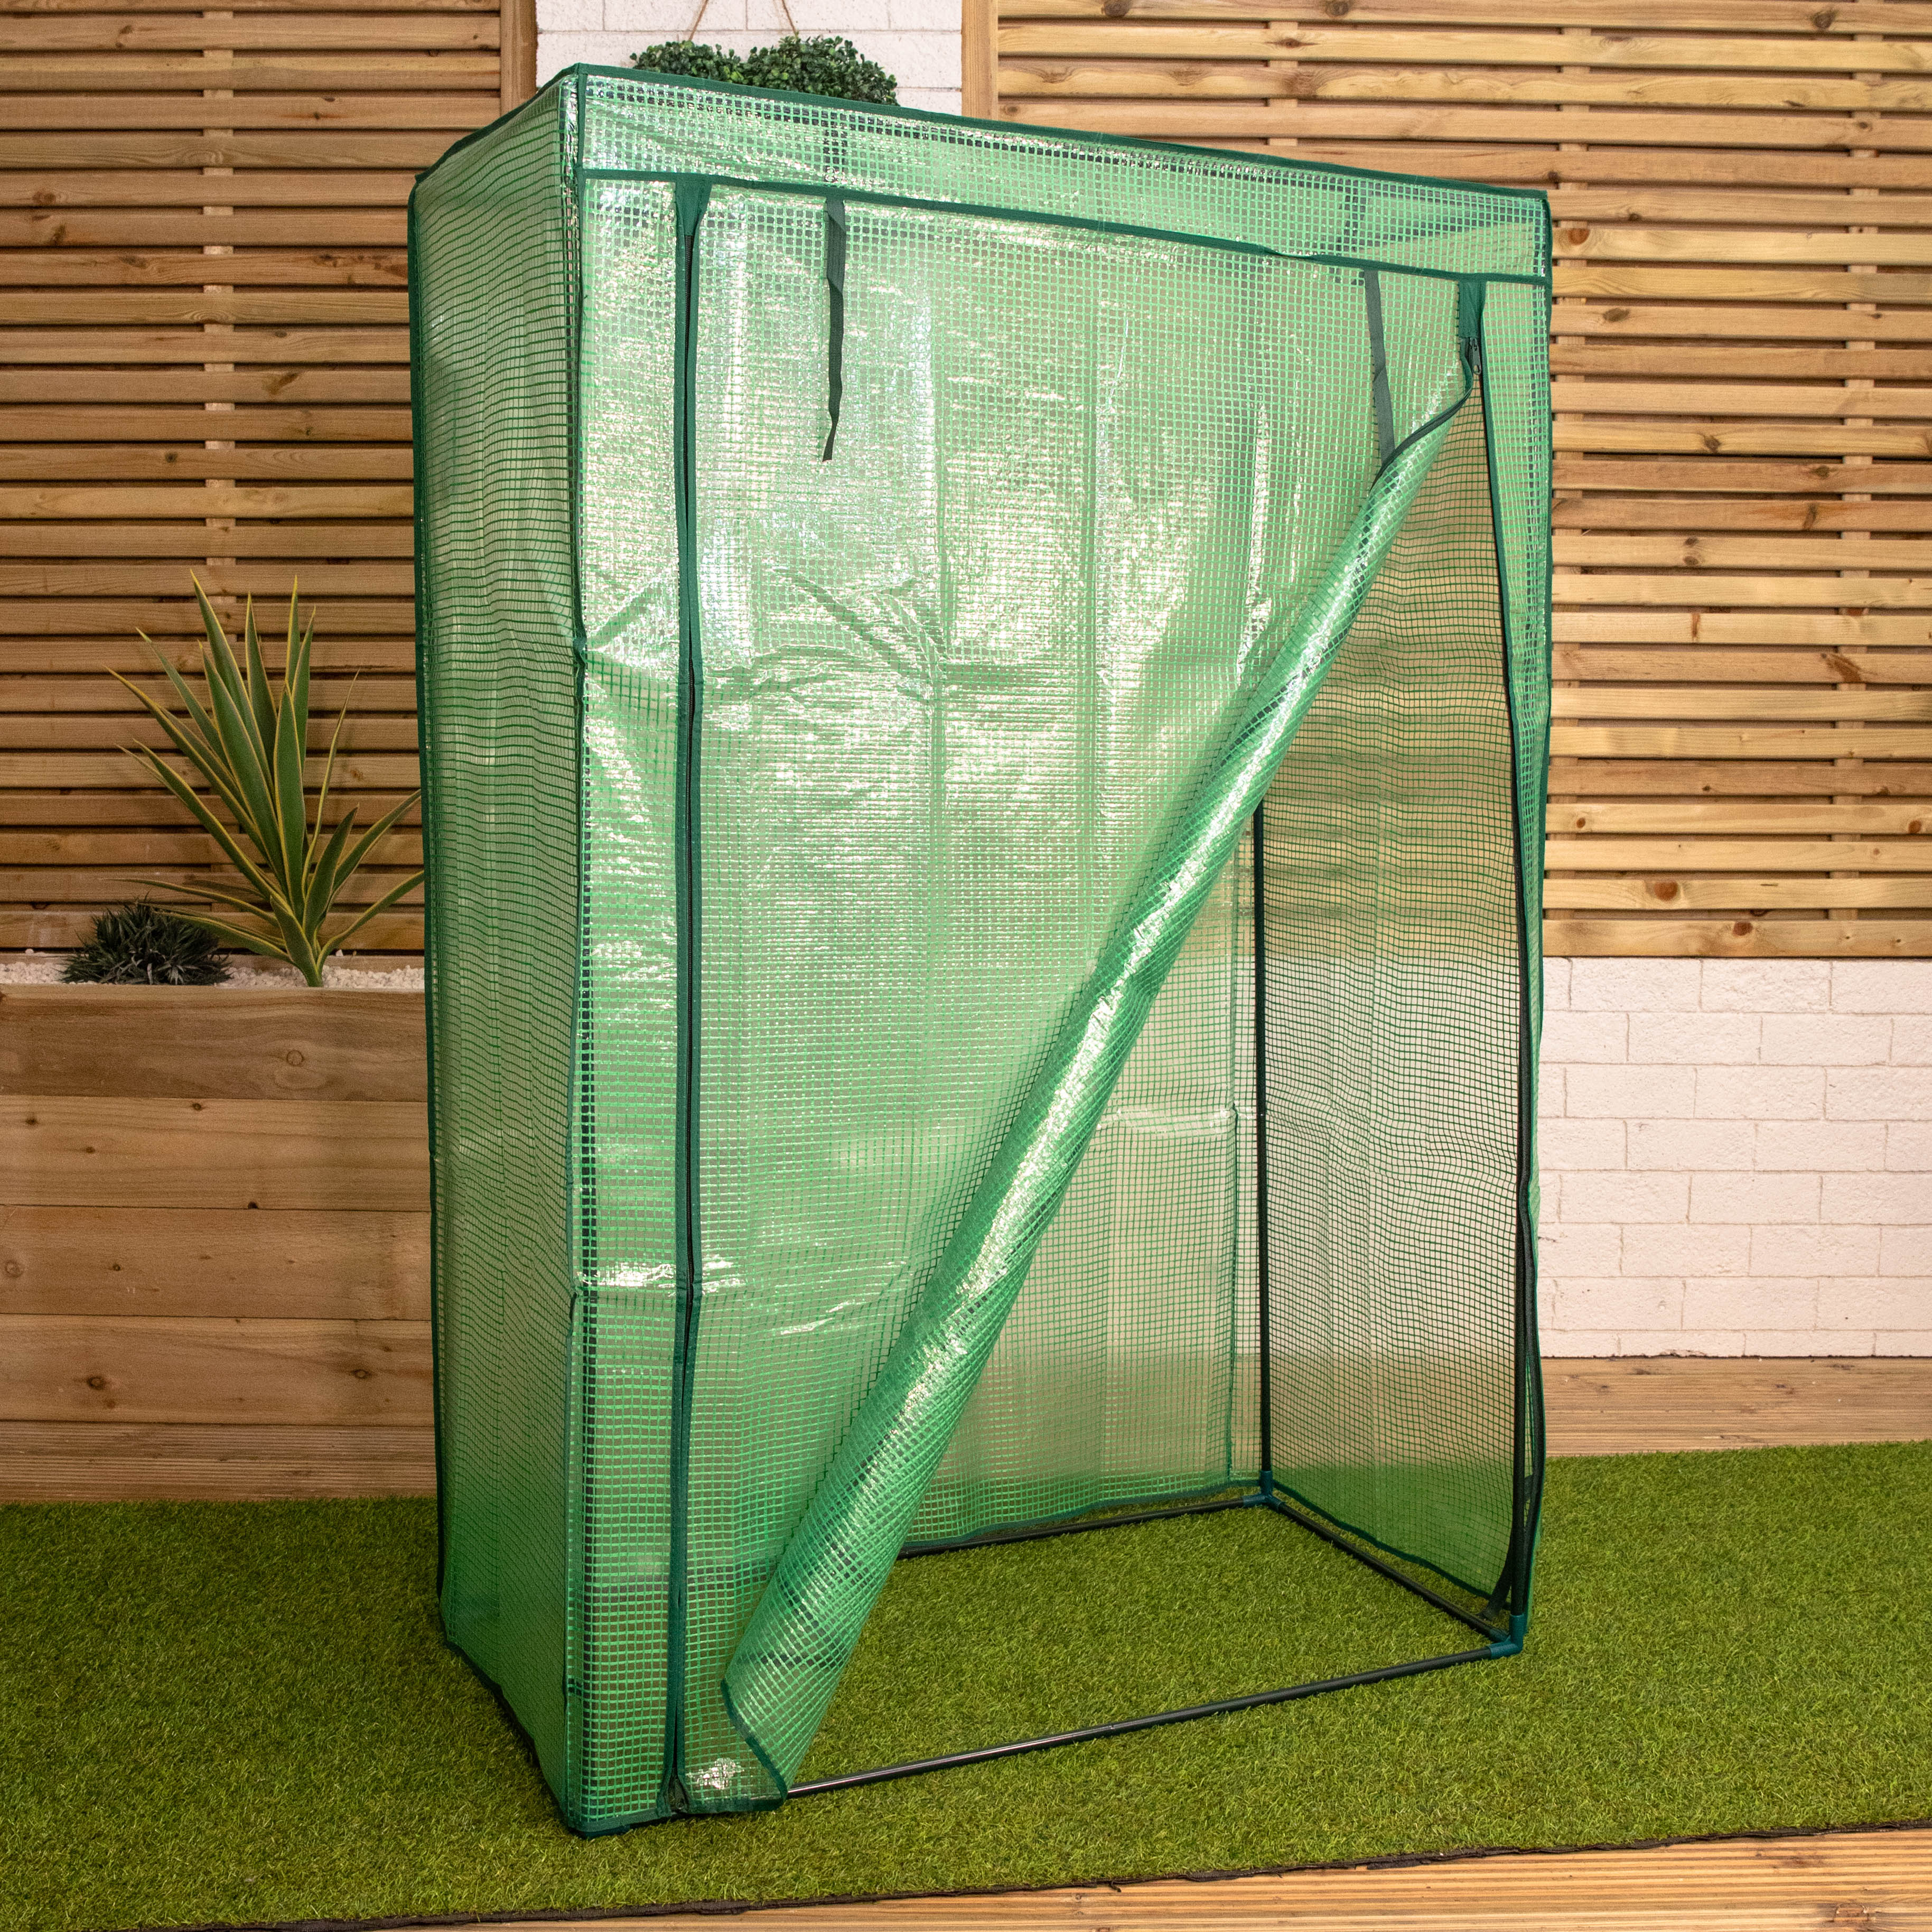 1.5m Green Outdoor Weatherproof Garden Patio Tomato & Plant Greenhouse Cover